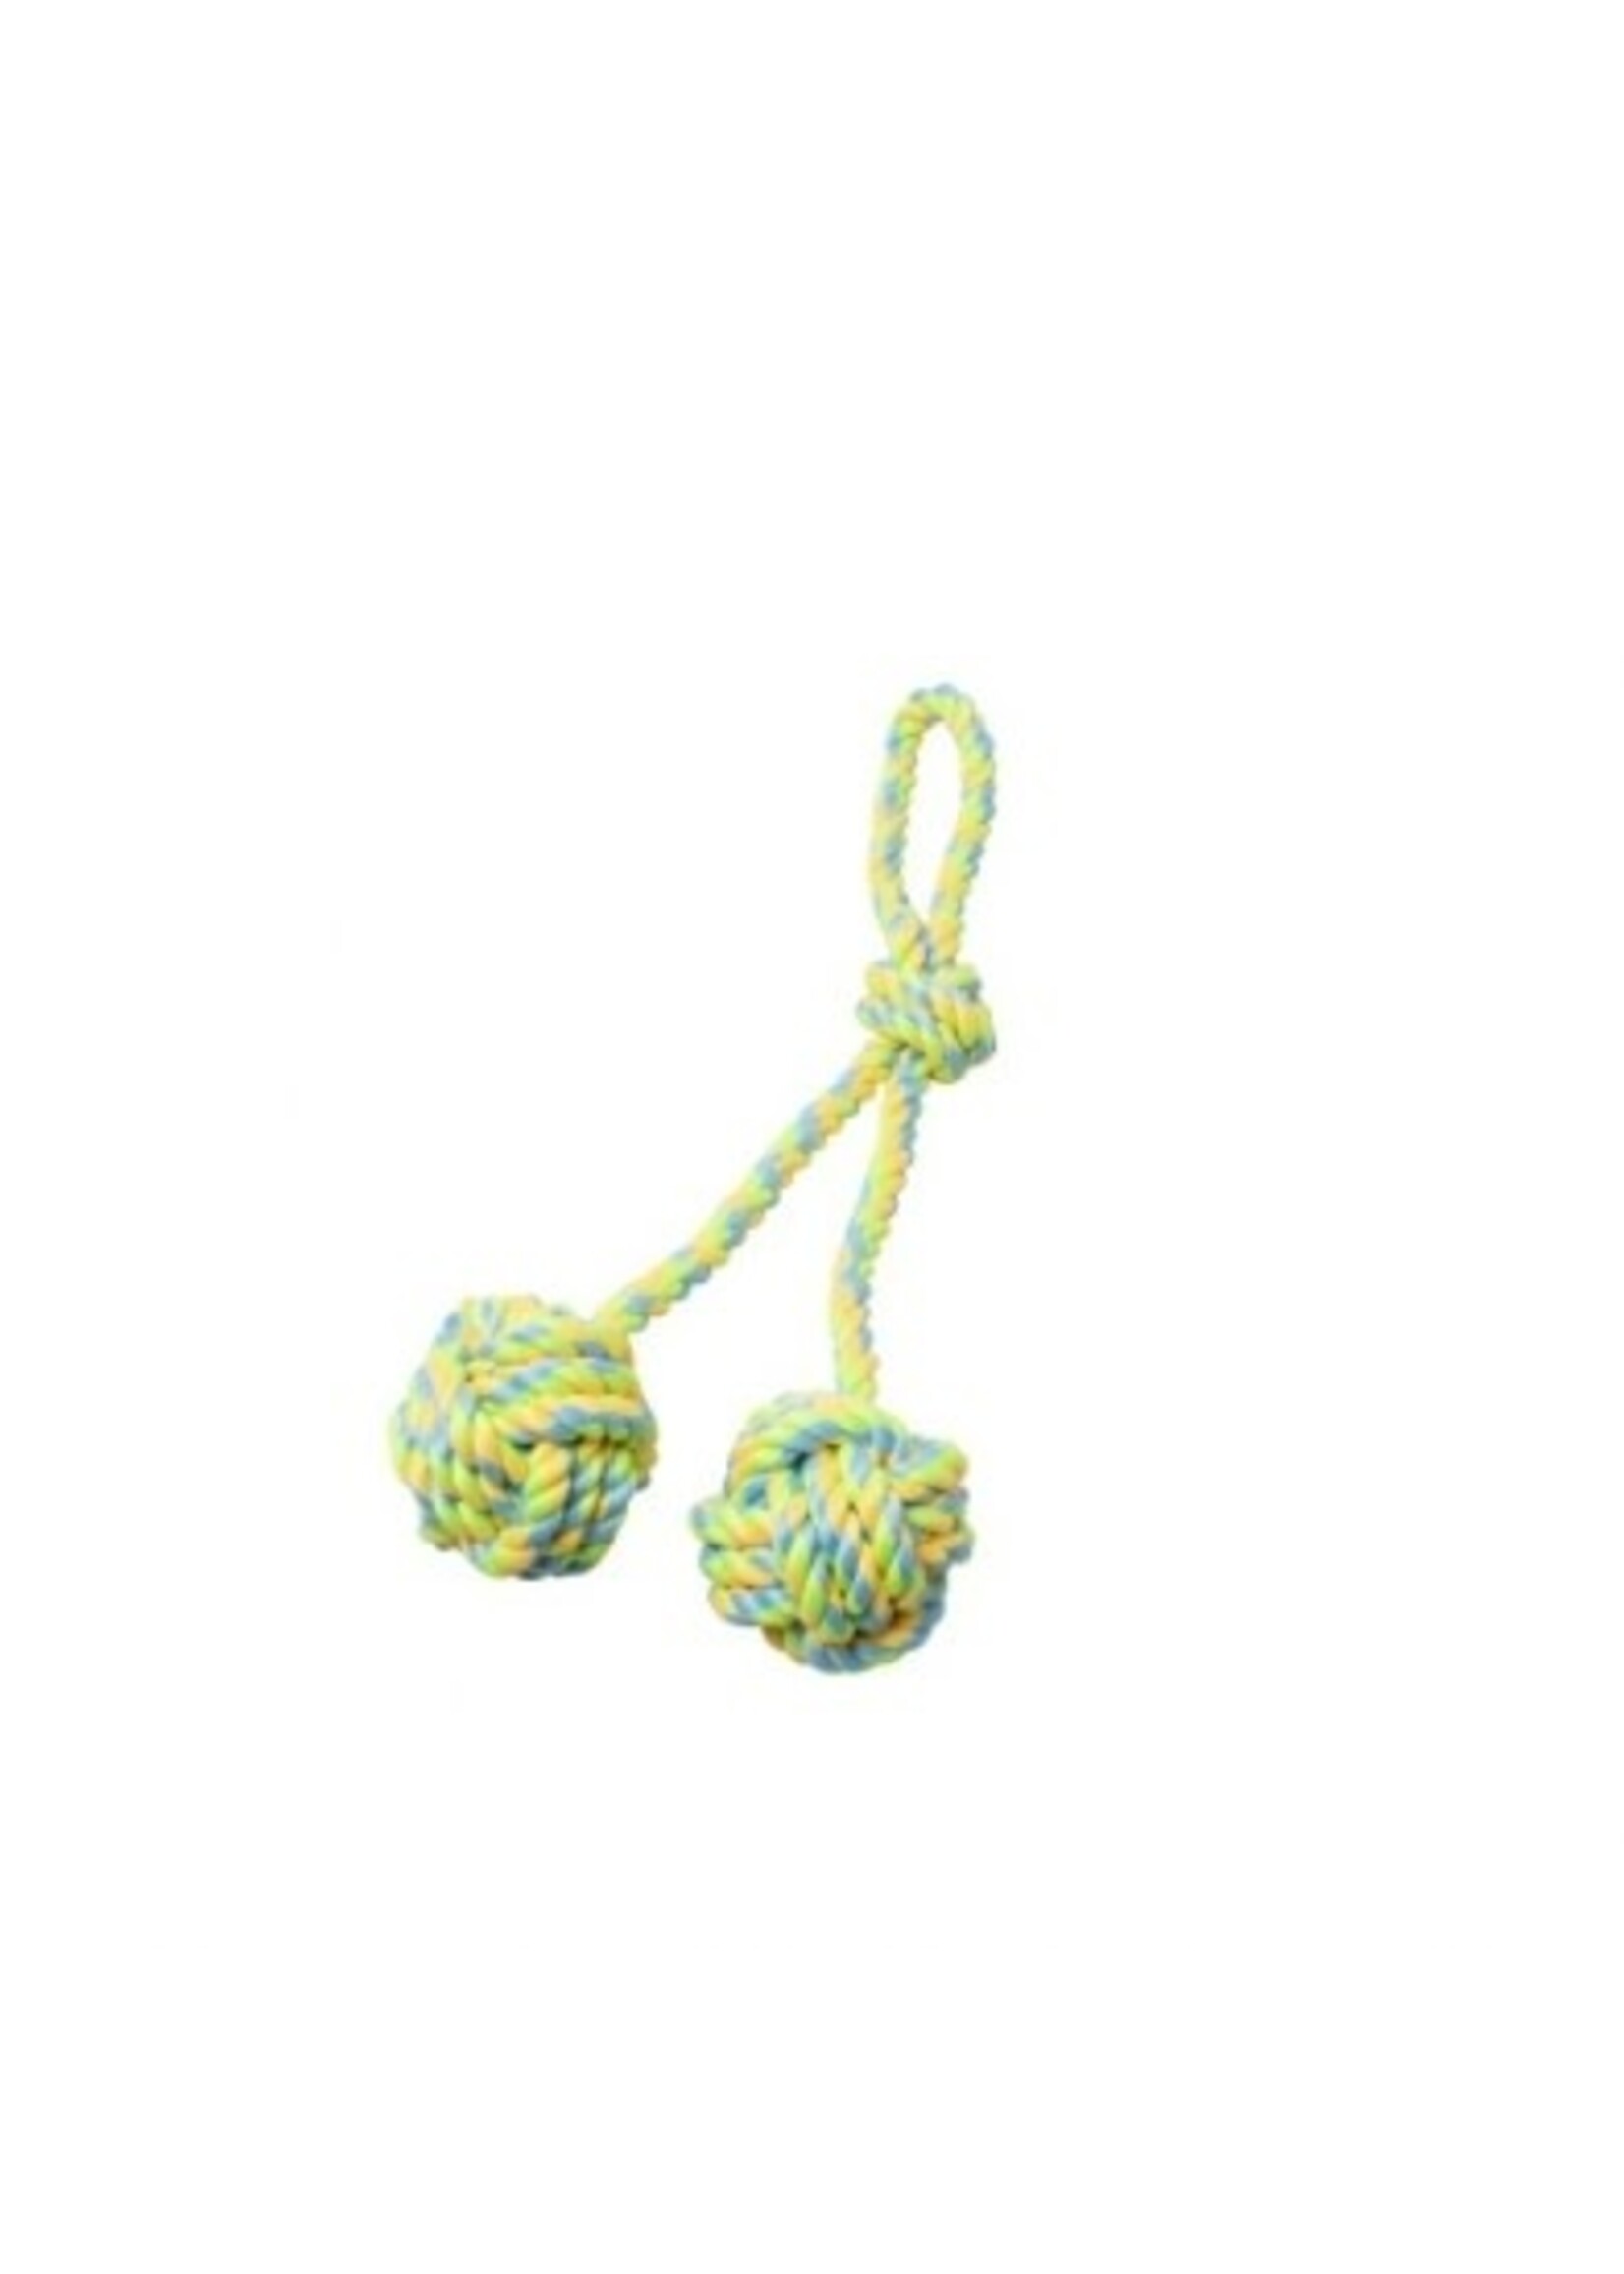 Budz Budz - Dog Toy Rope Dble Monkey Fist,Loop Green-Yellow 15.5''